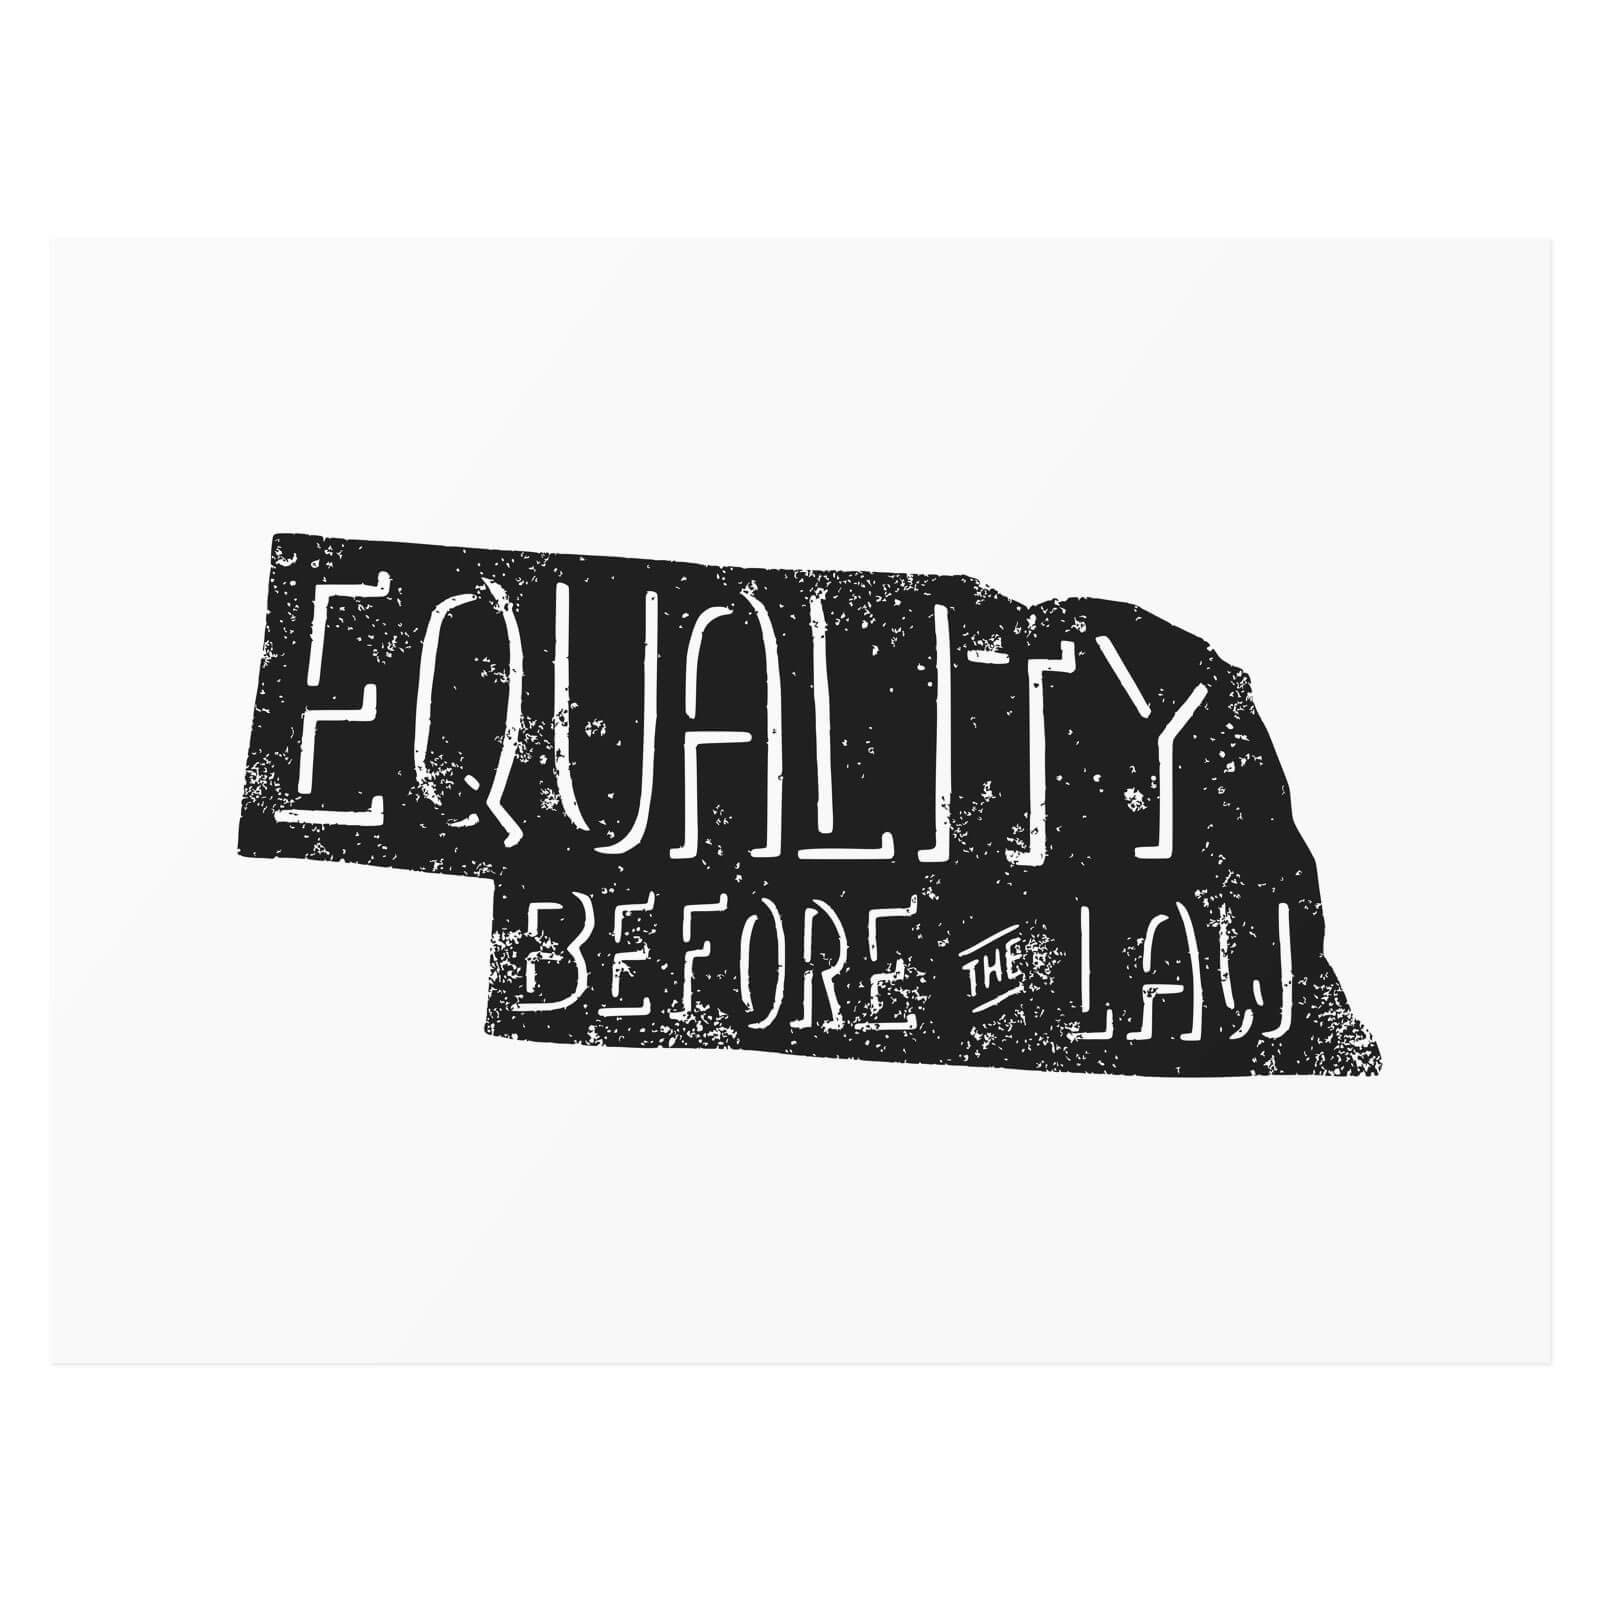 Nebraska — Equality before the law